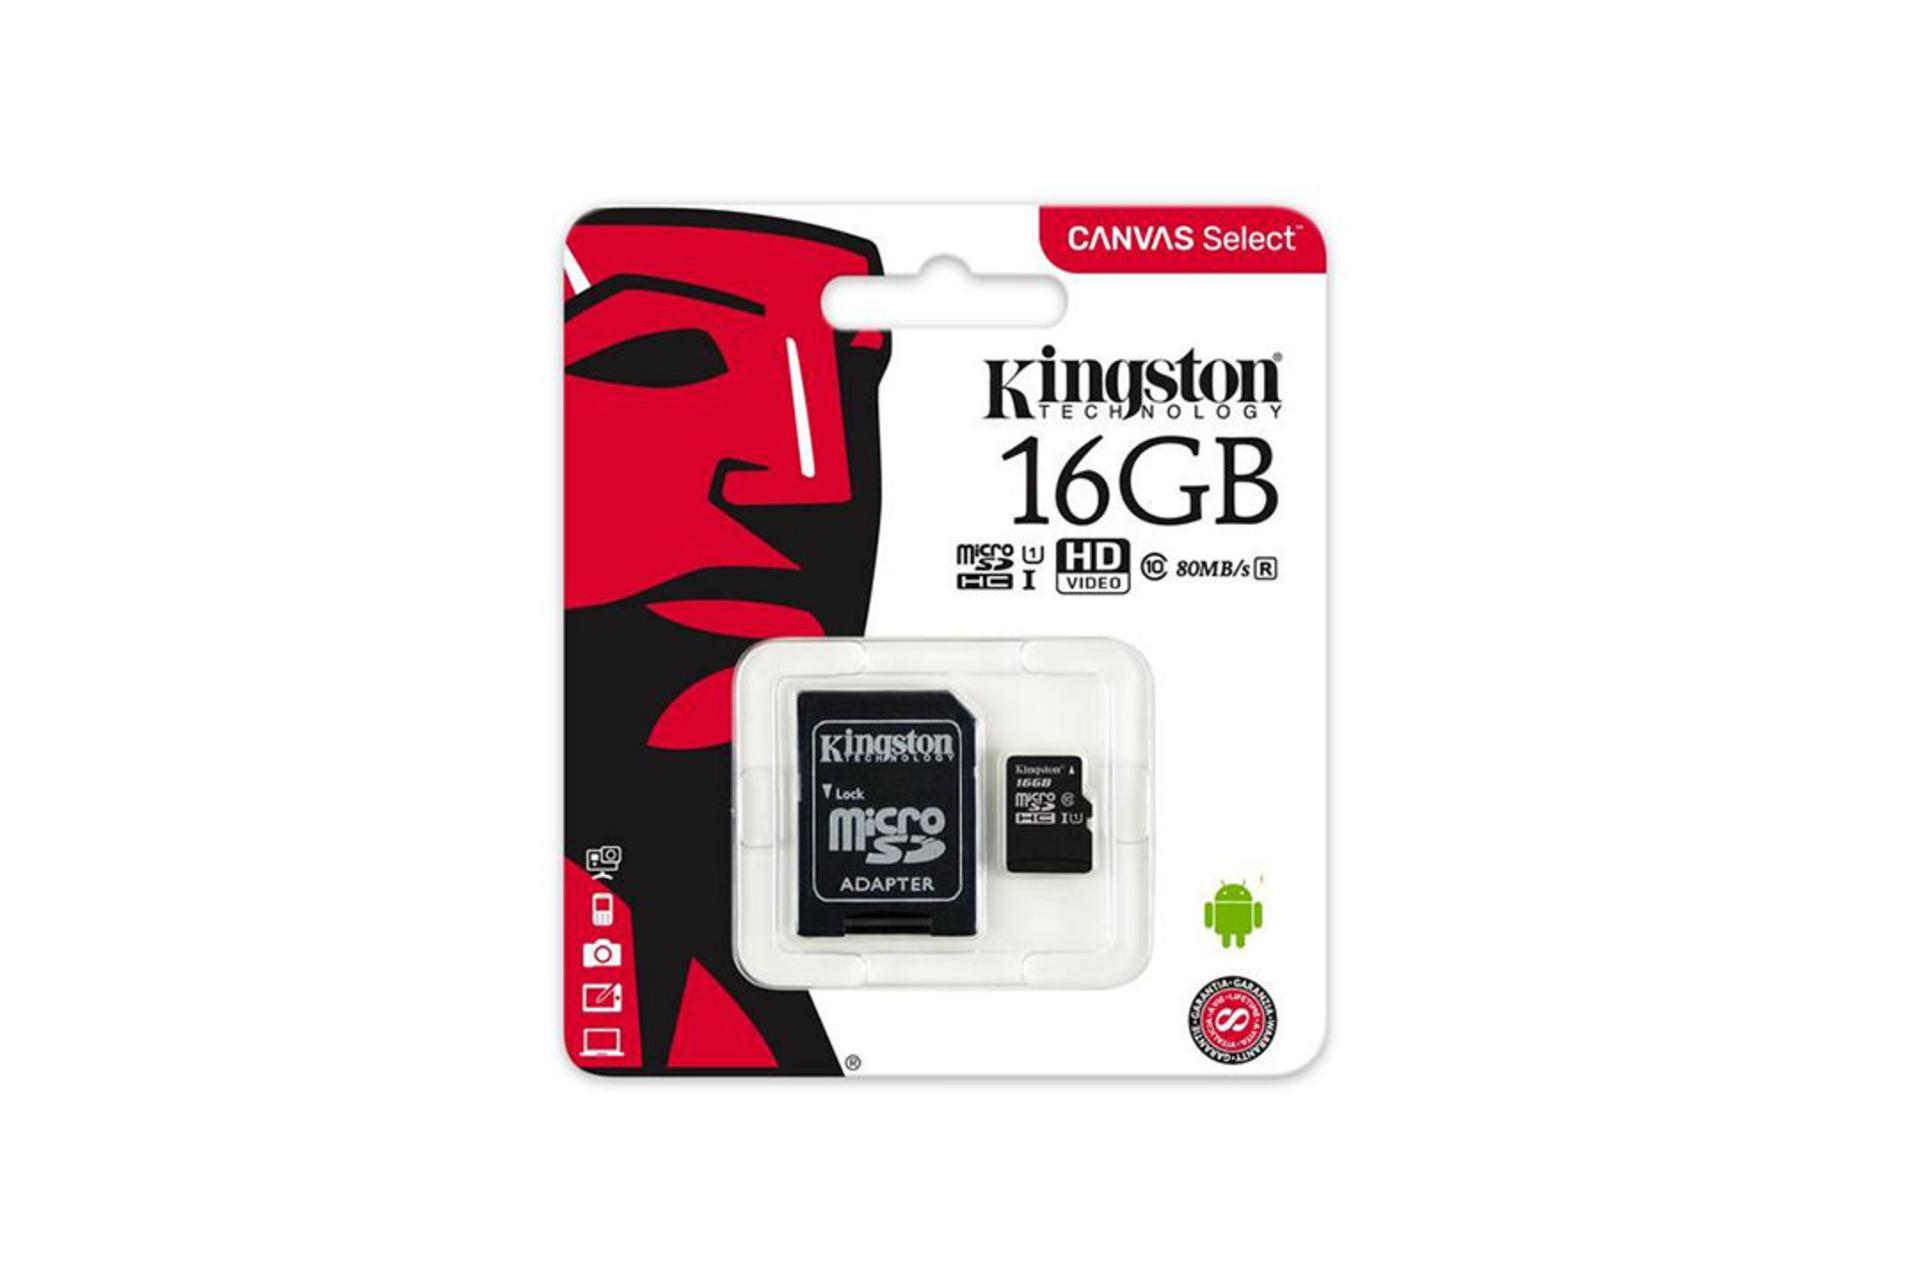 Kingston microSDHC Class 10 UHS-I U1 16GB